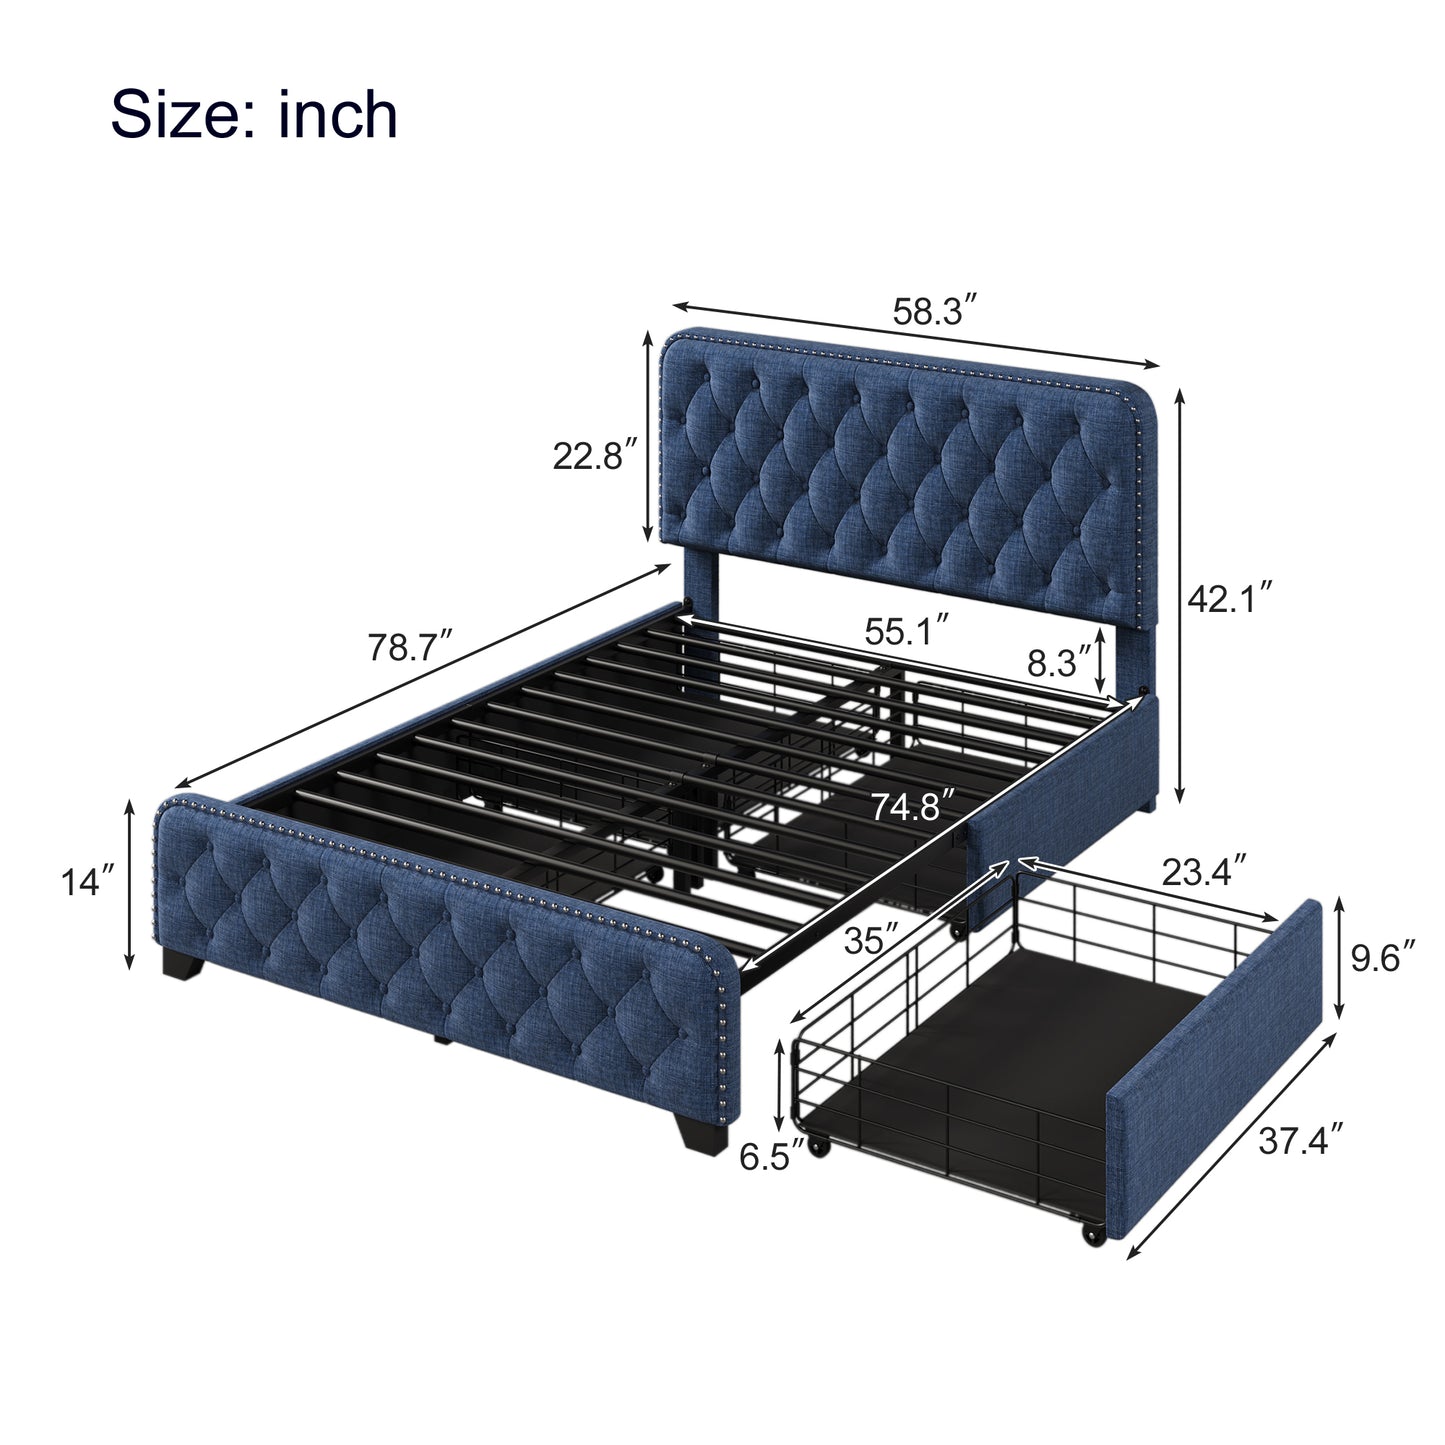 Hazel Full Bed (blue)